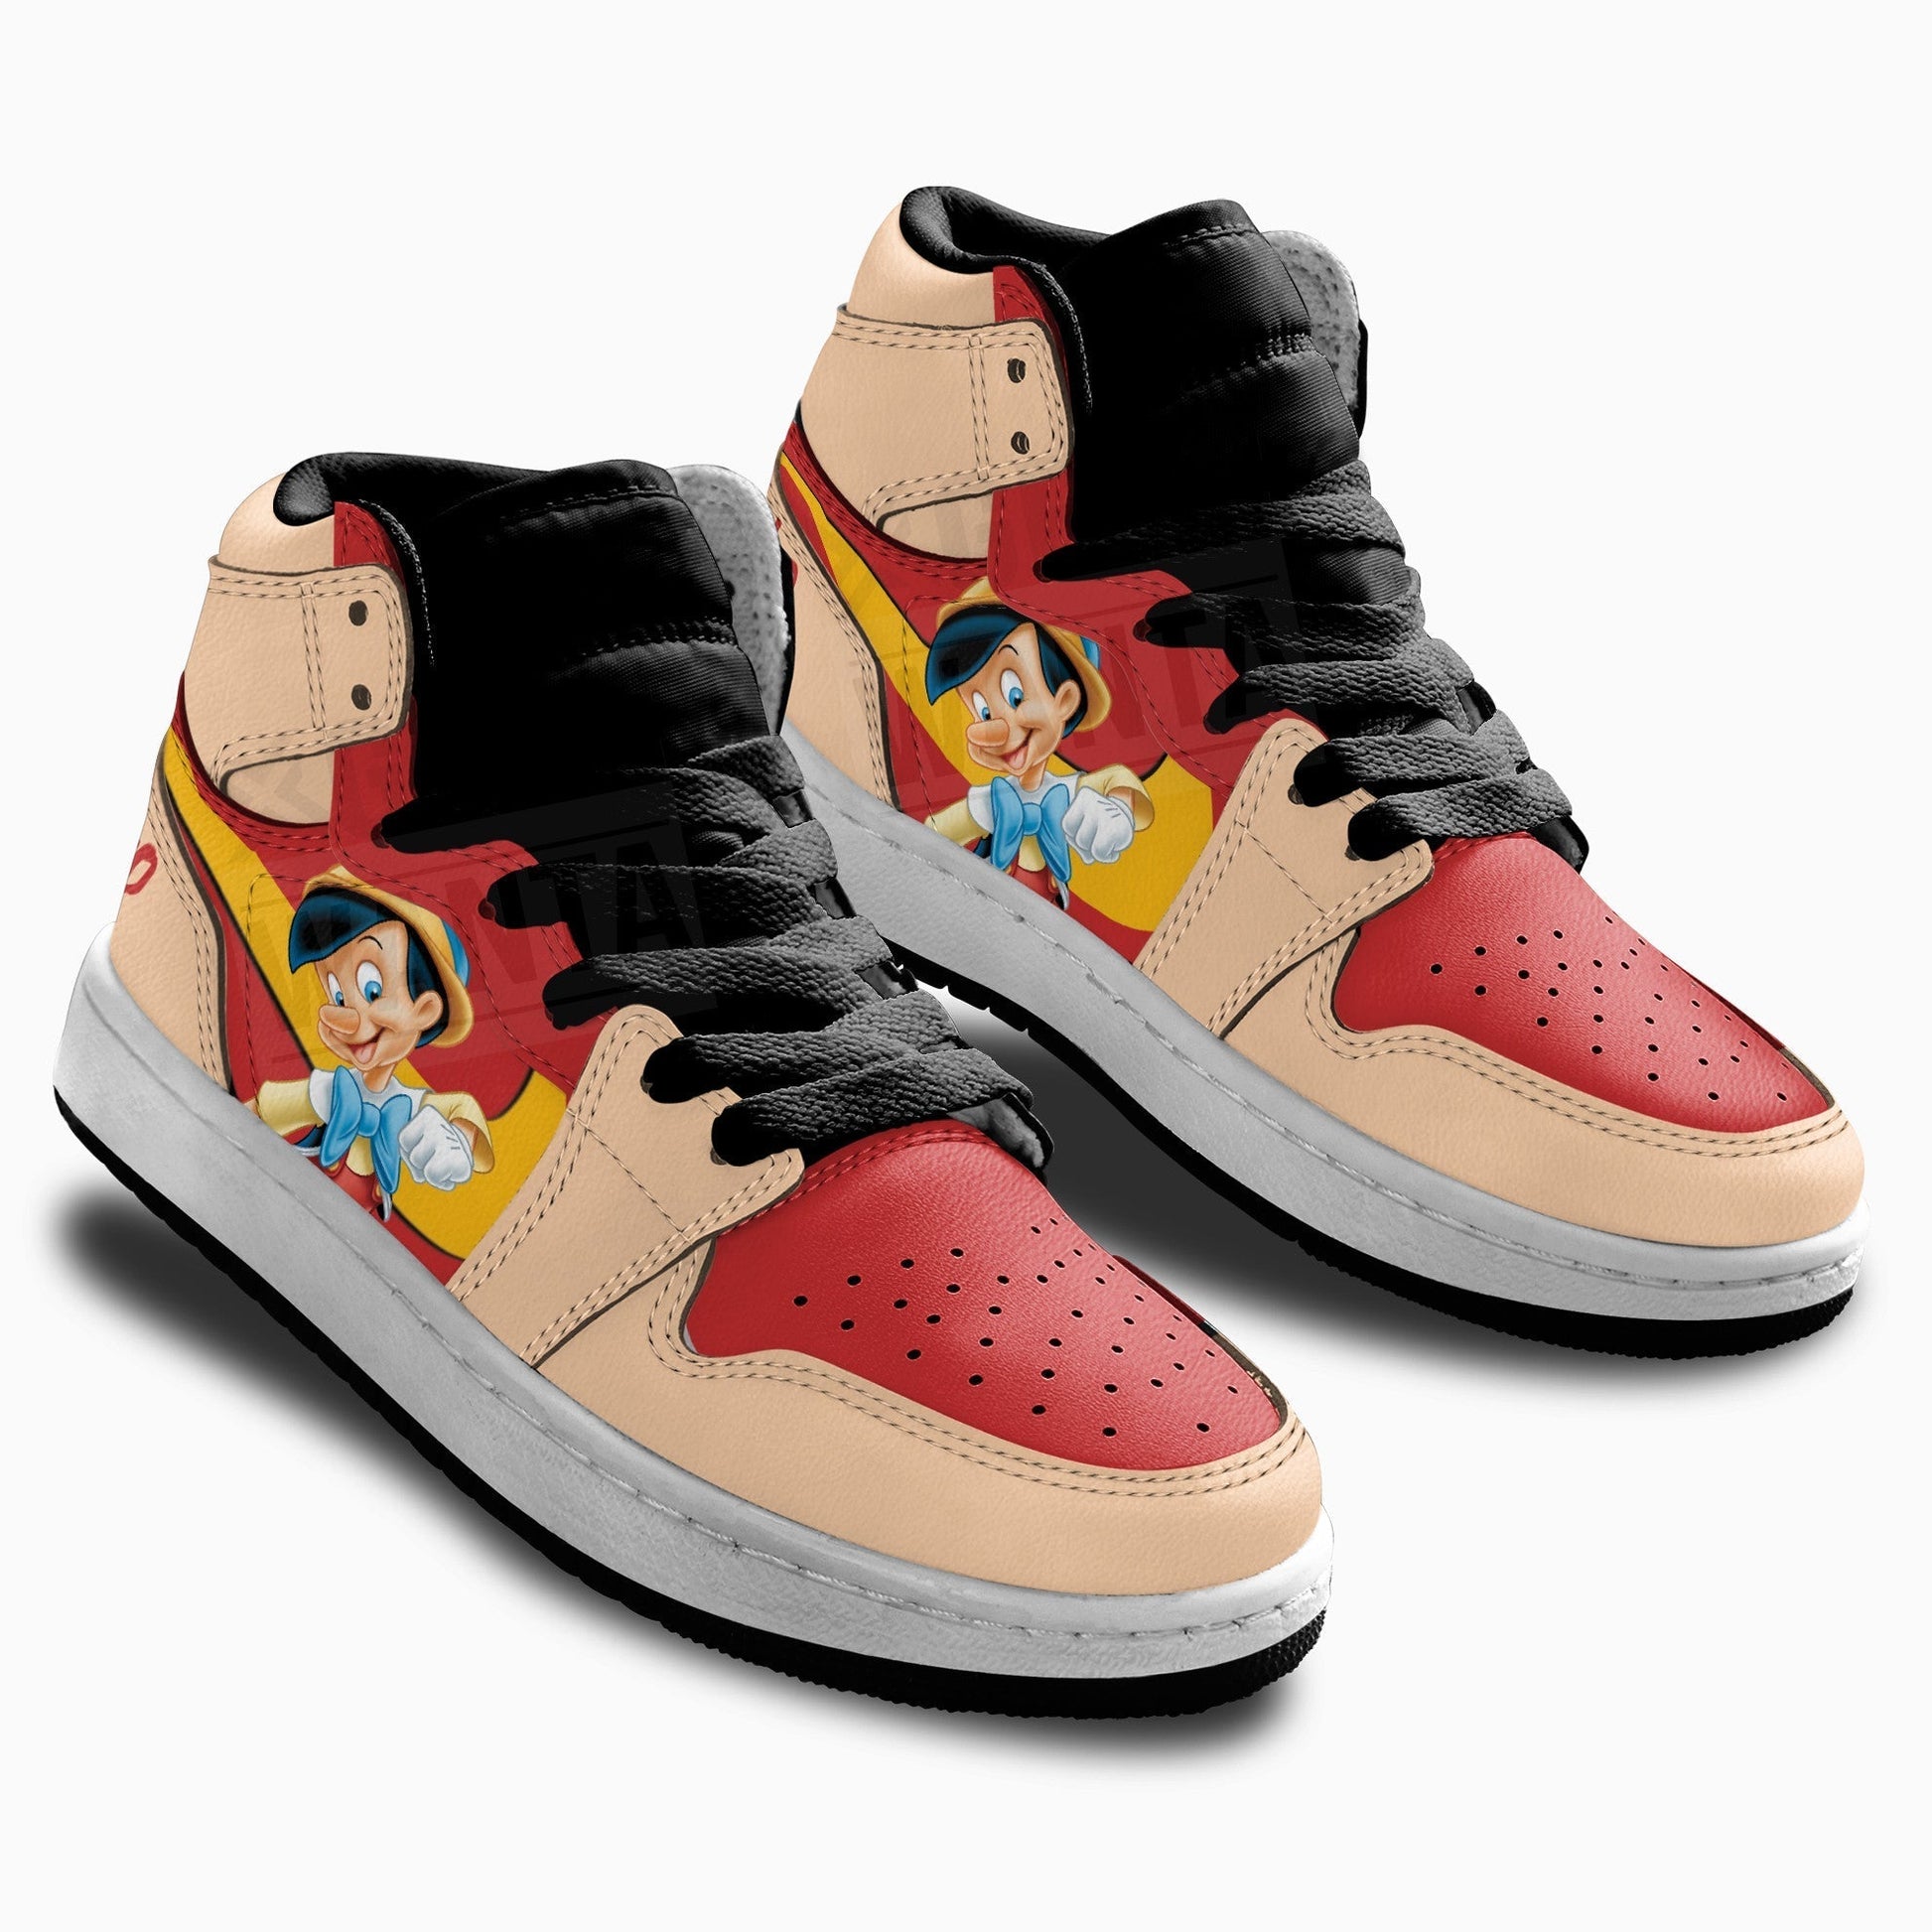 Pinocchio Kid Sneakers Custom-Gear Wanta